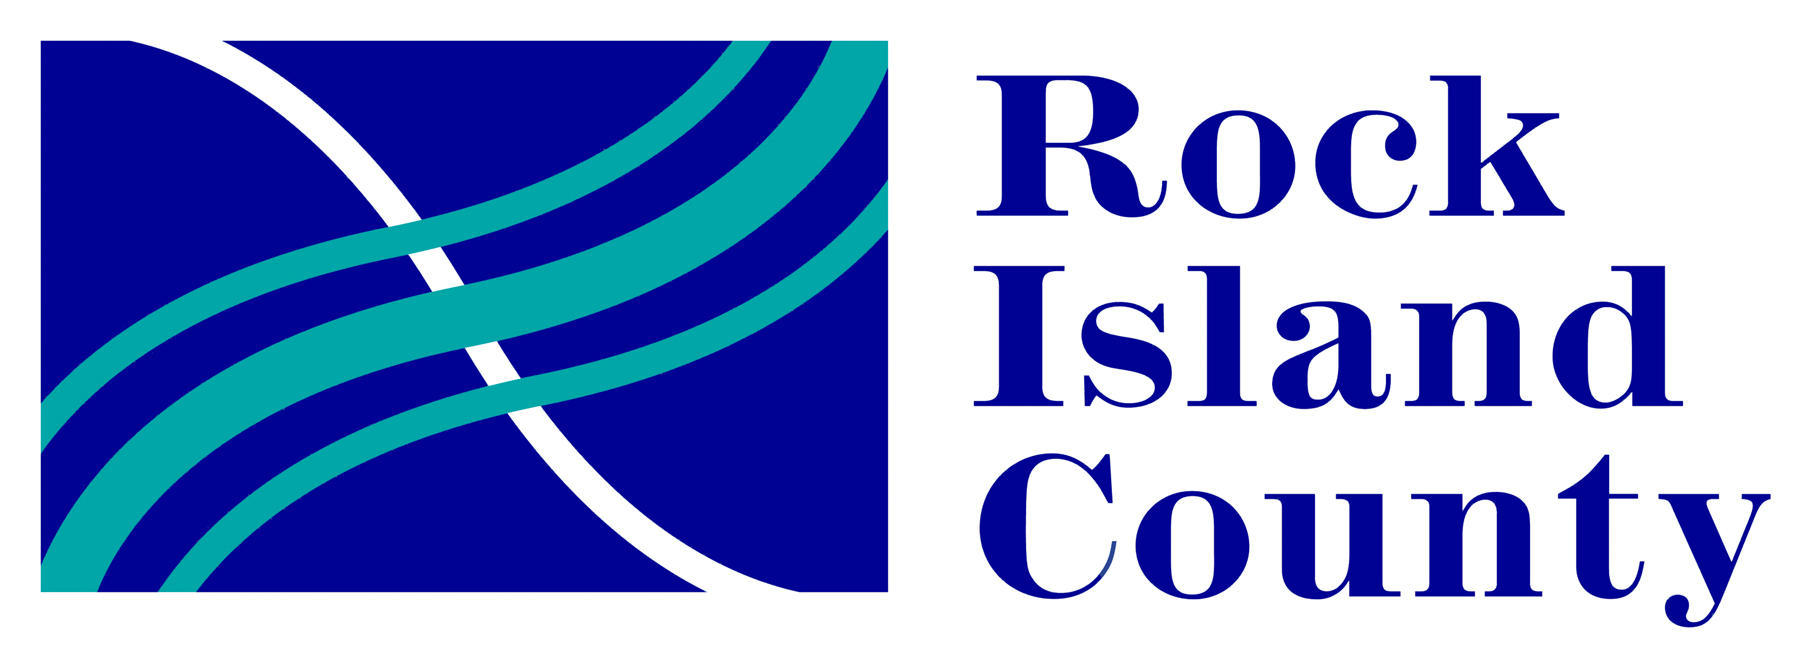 Rock island county jobs available